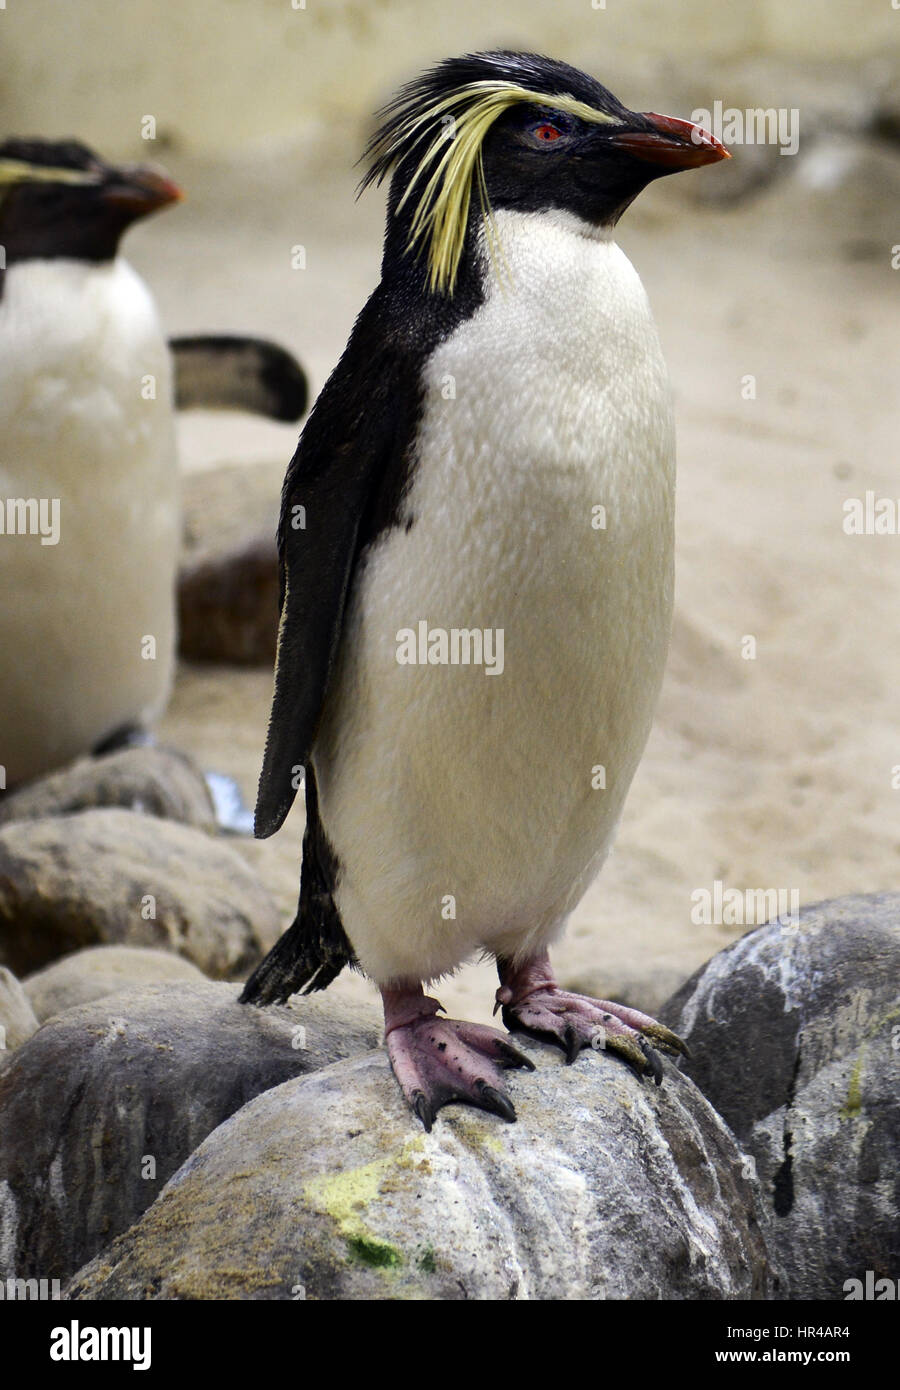 Rockhopper penguins in Cape Town's Two Oceans aquarium. Stock Photo